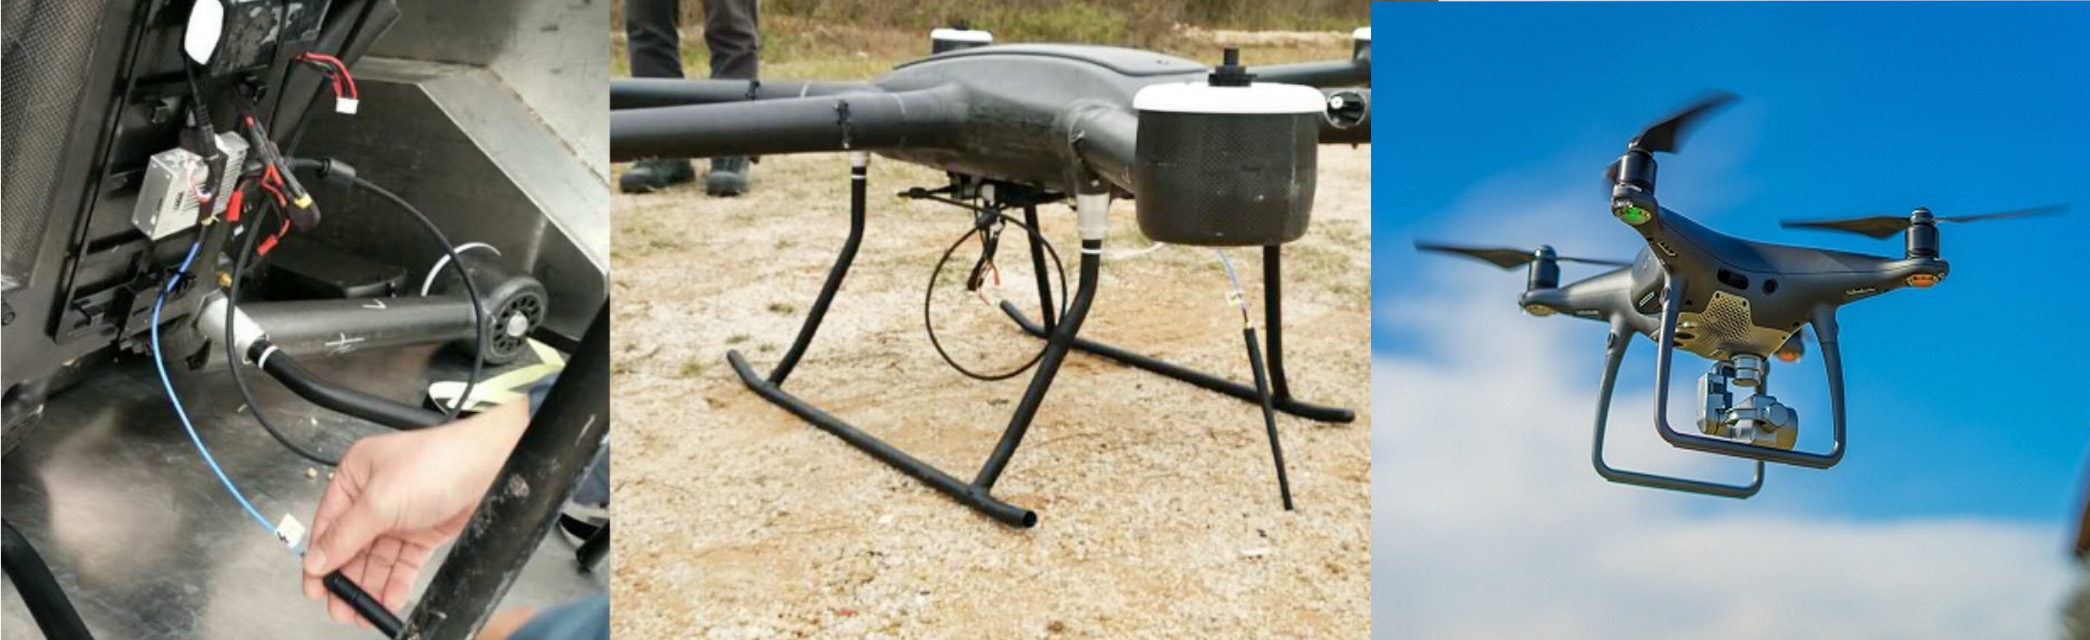 drone-video-transmitter